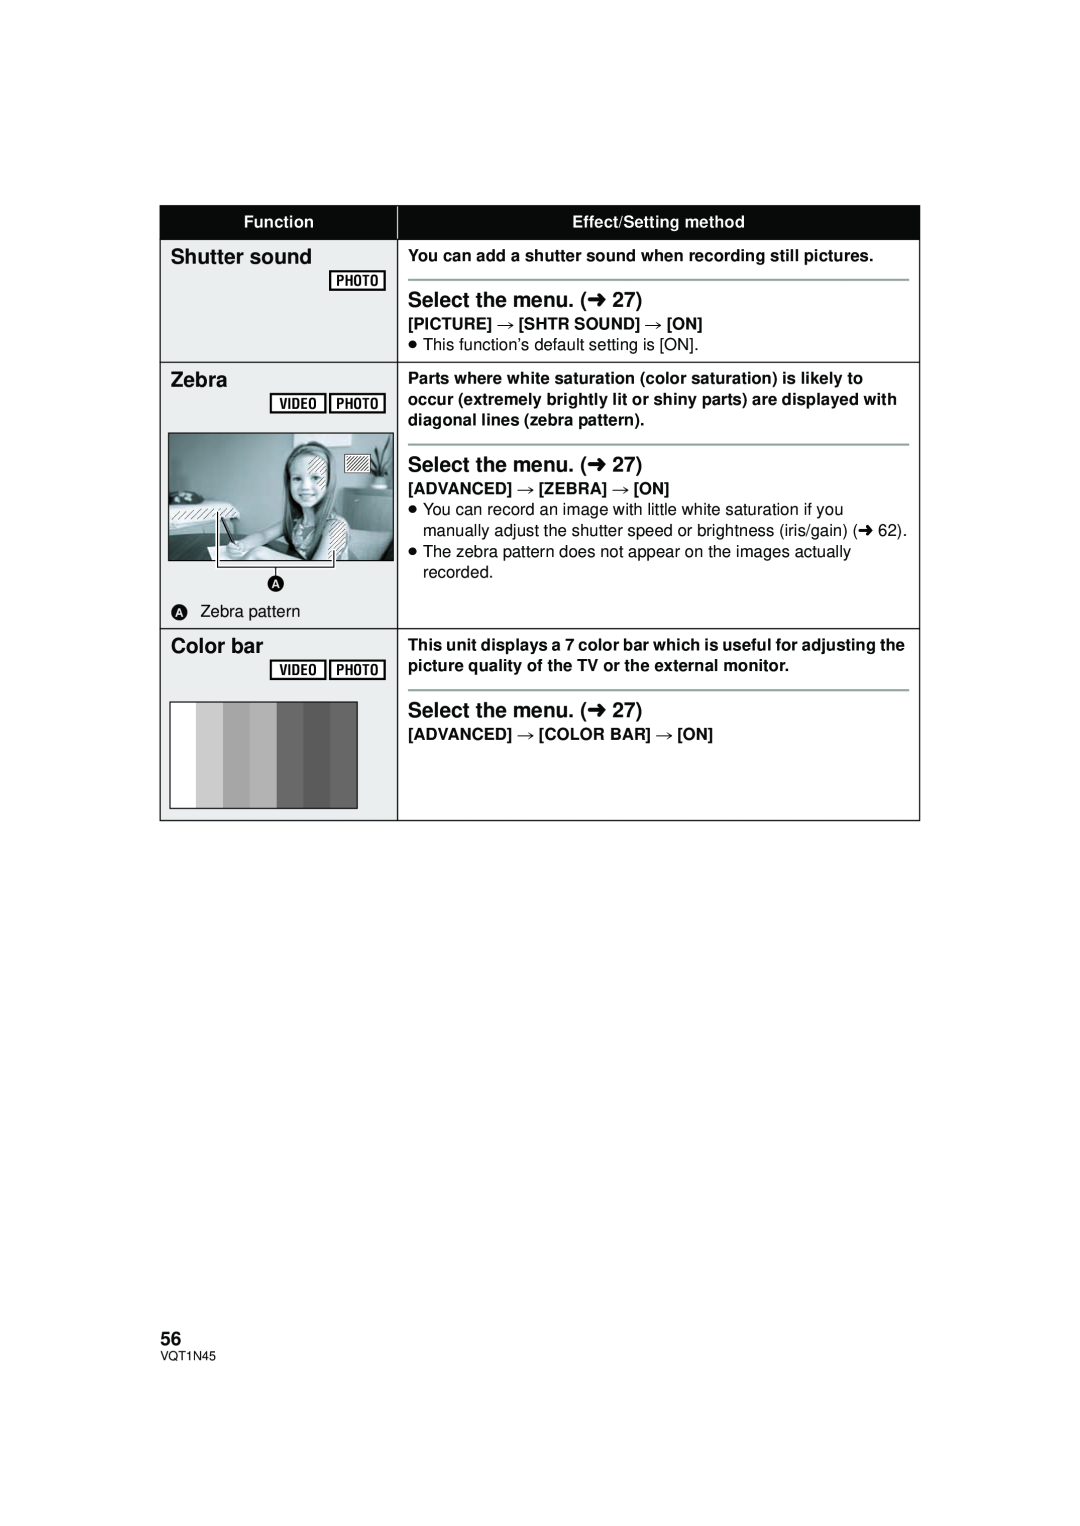 Panasonic HDC-SD9PC manual Shutter sound, Zebra, Color bar, Select the menu. l, Function, Effect/Setting method 